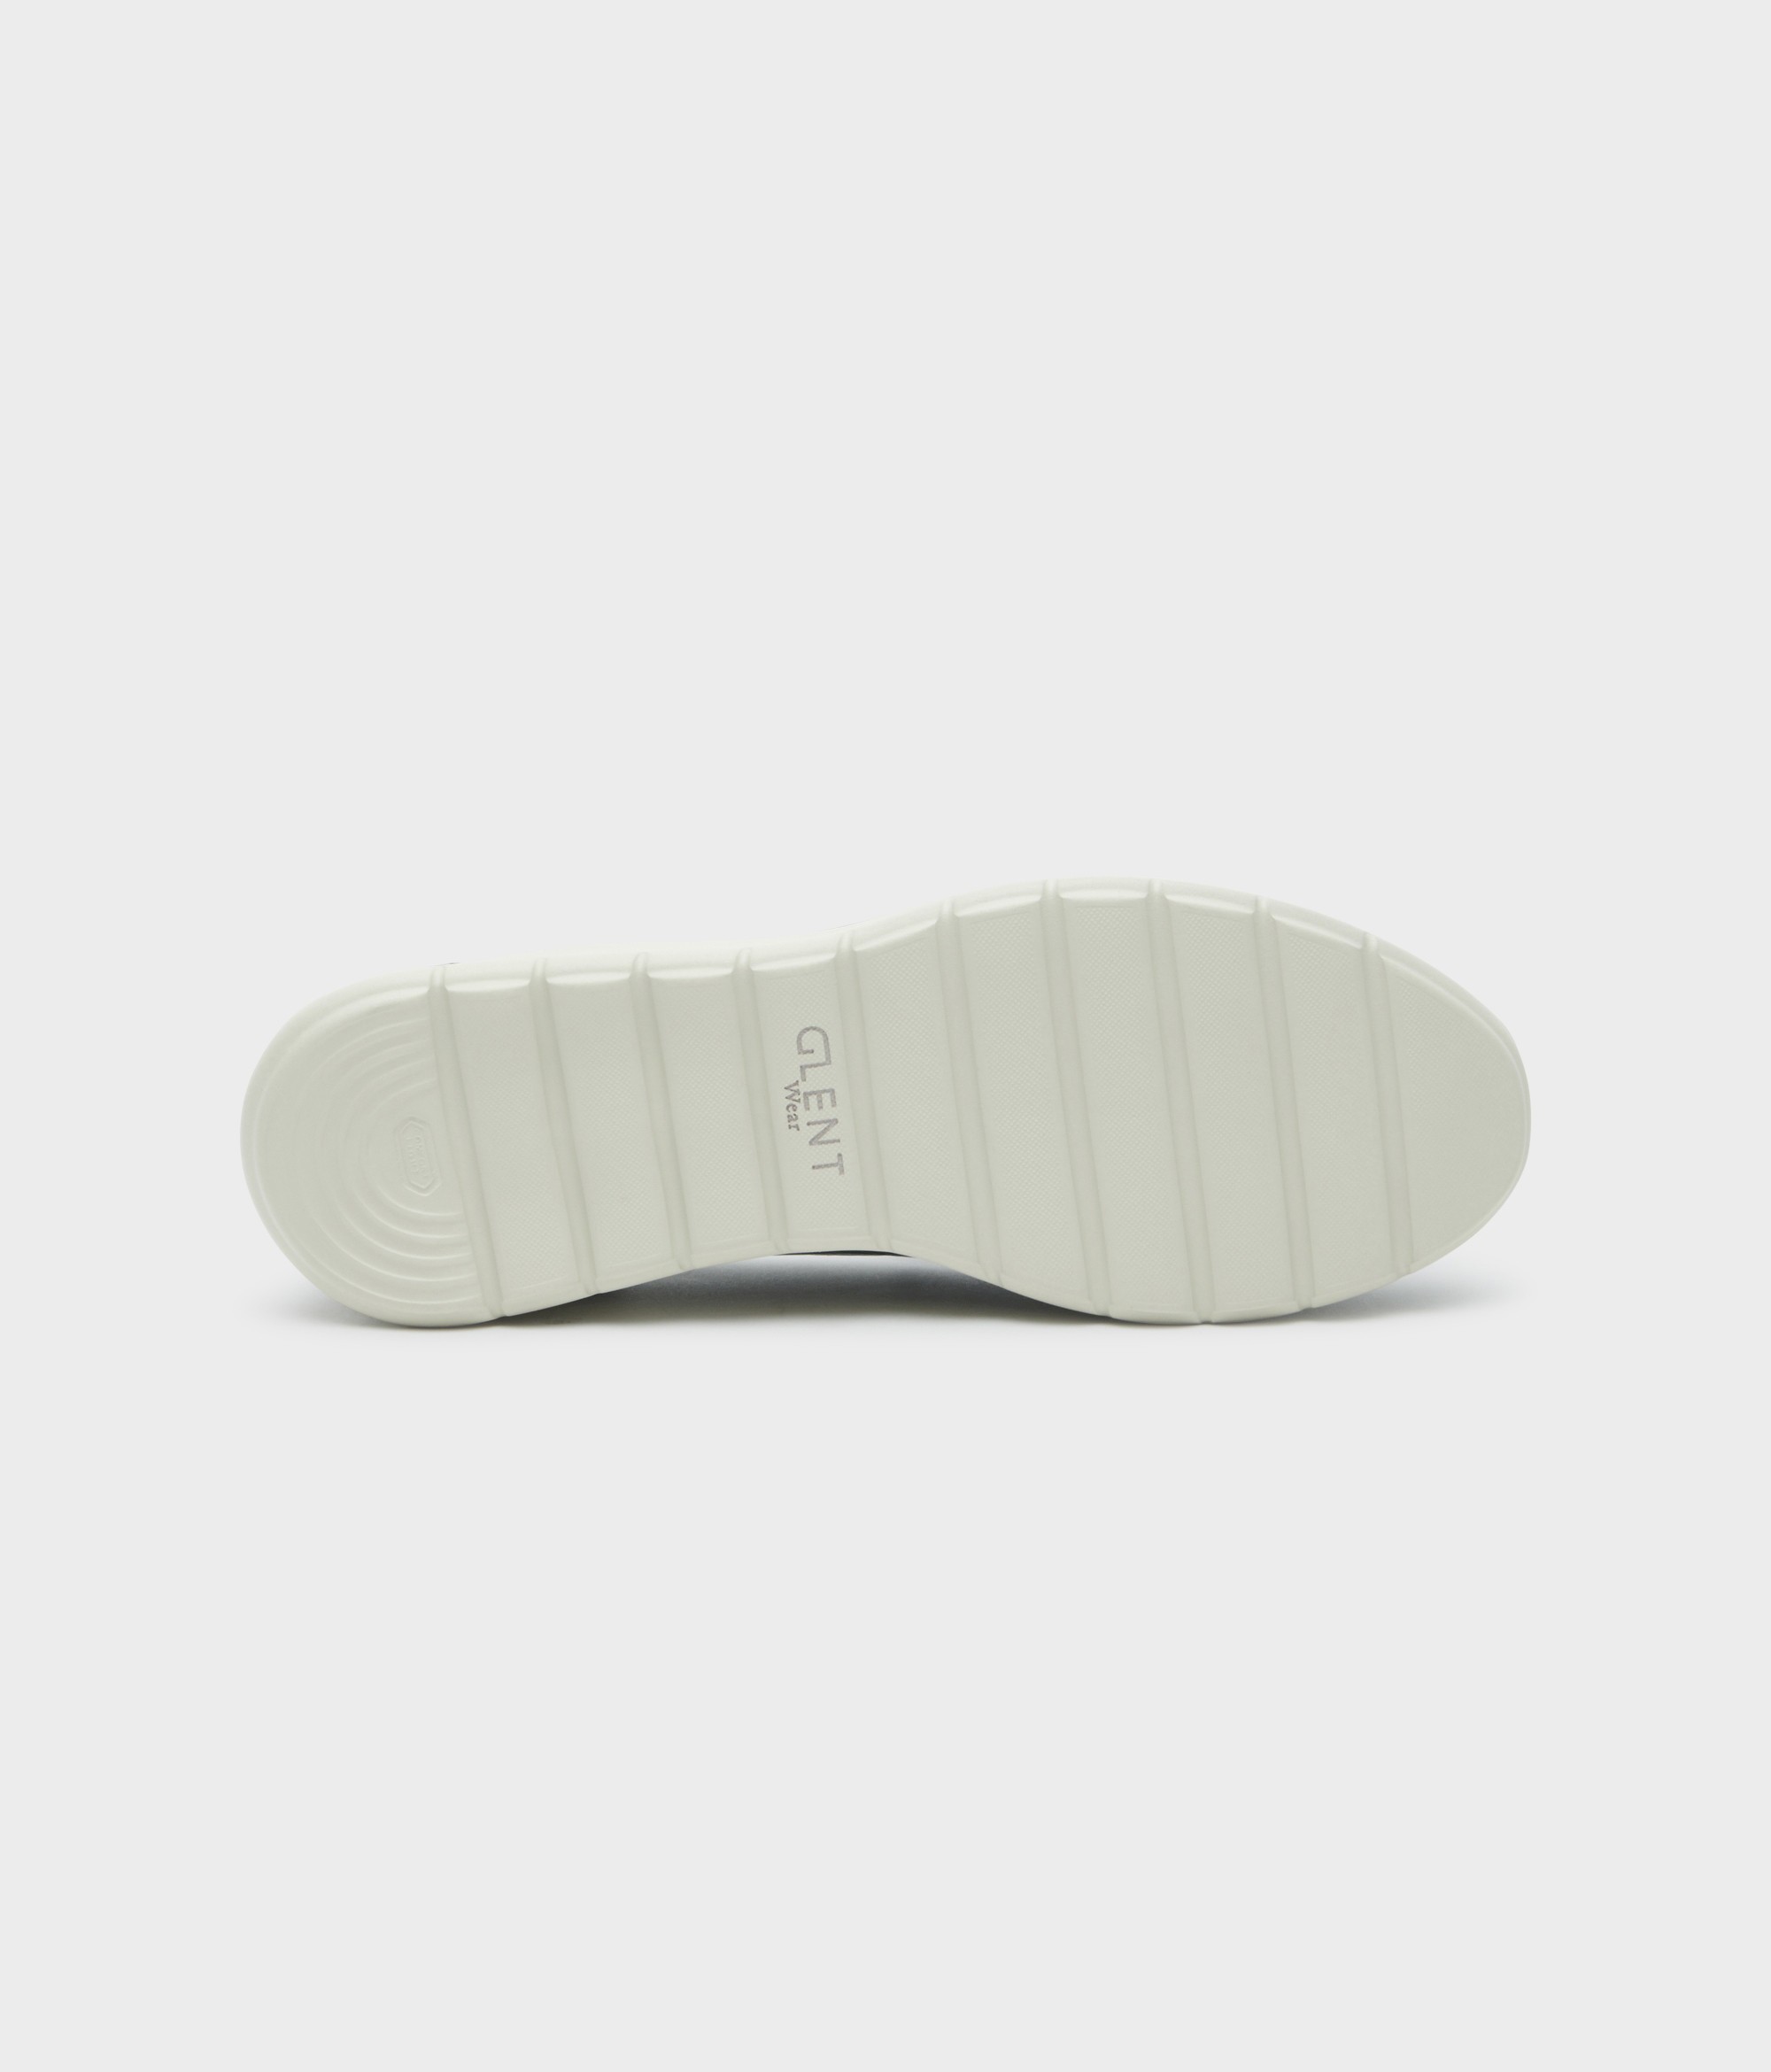 Loafer comfort sole